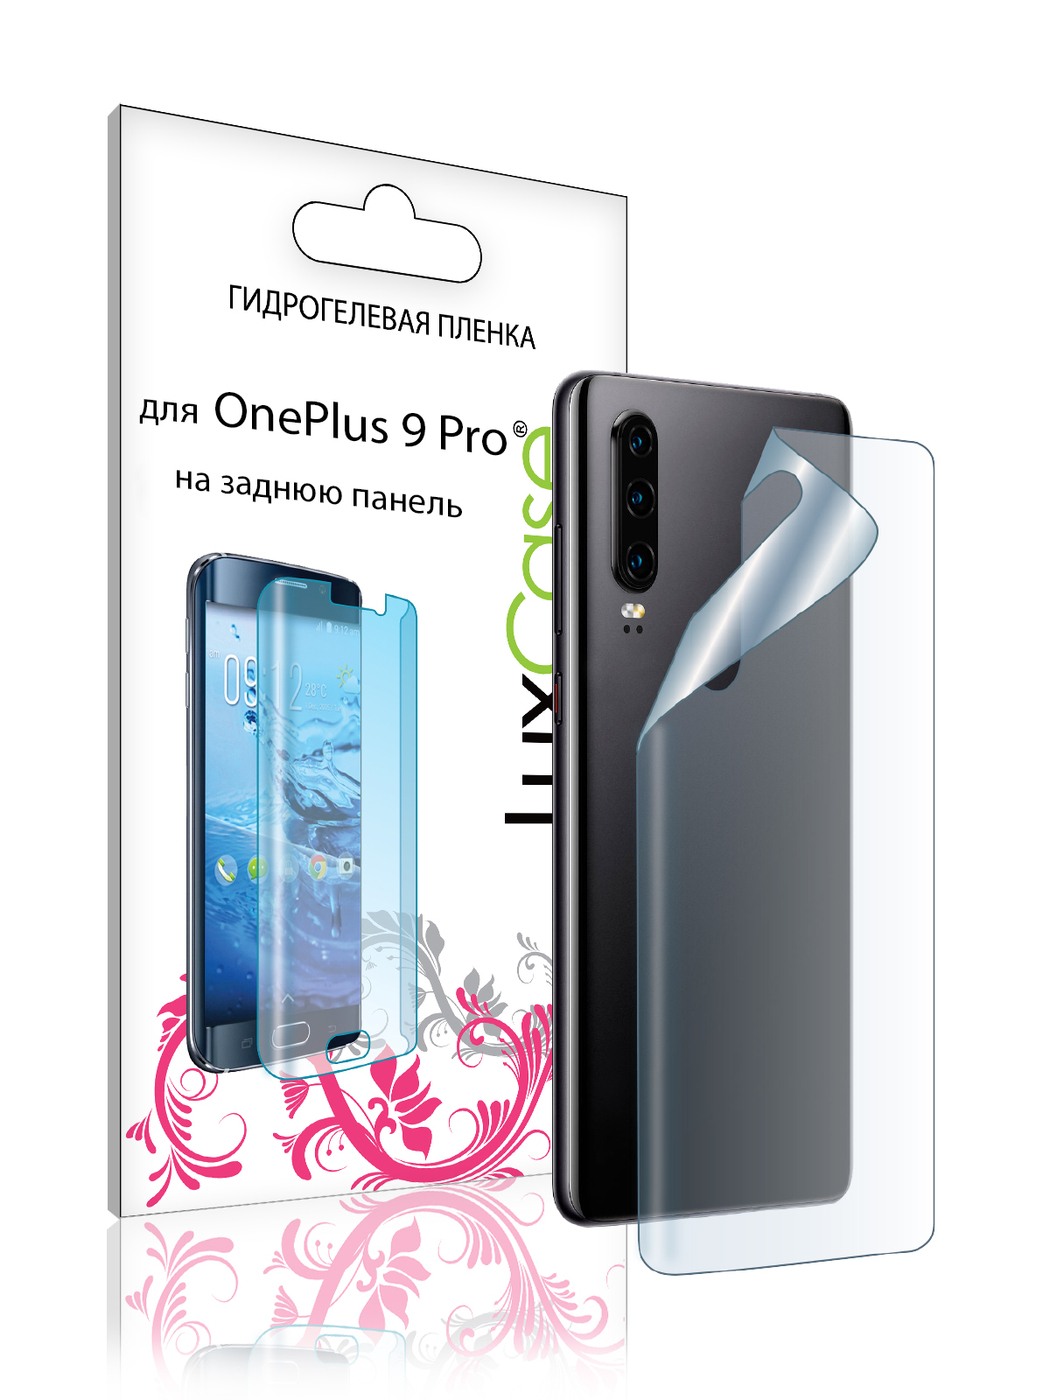 Защита задней крышки LuxCase для OnePlus 9 Pro пленка 0.14mm Transparent 86140 защитная пленка luxcase для oneplus 9 pro back 0 14mm transparent 86140